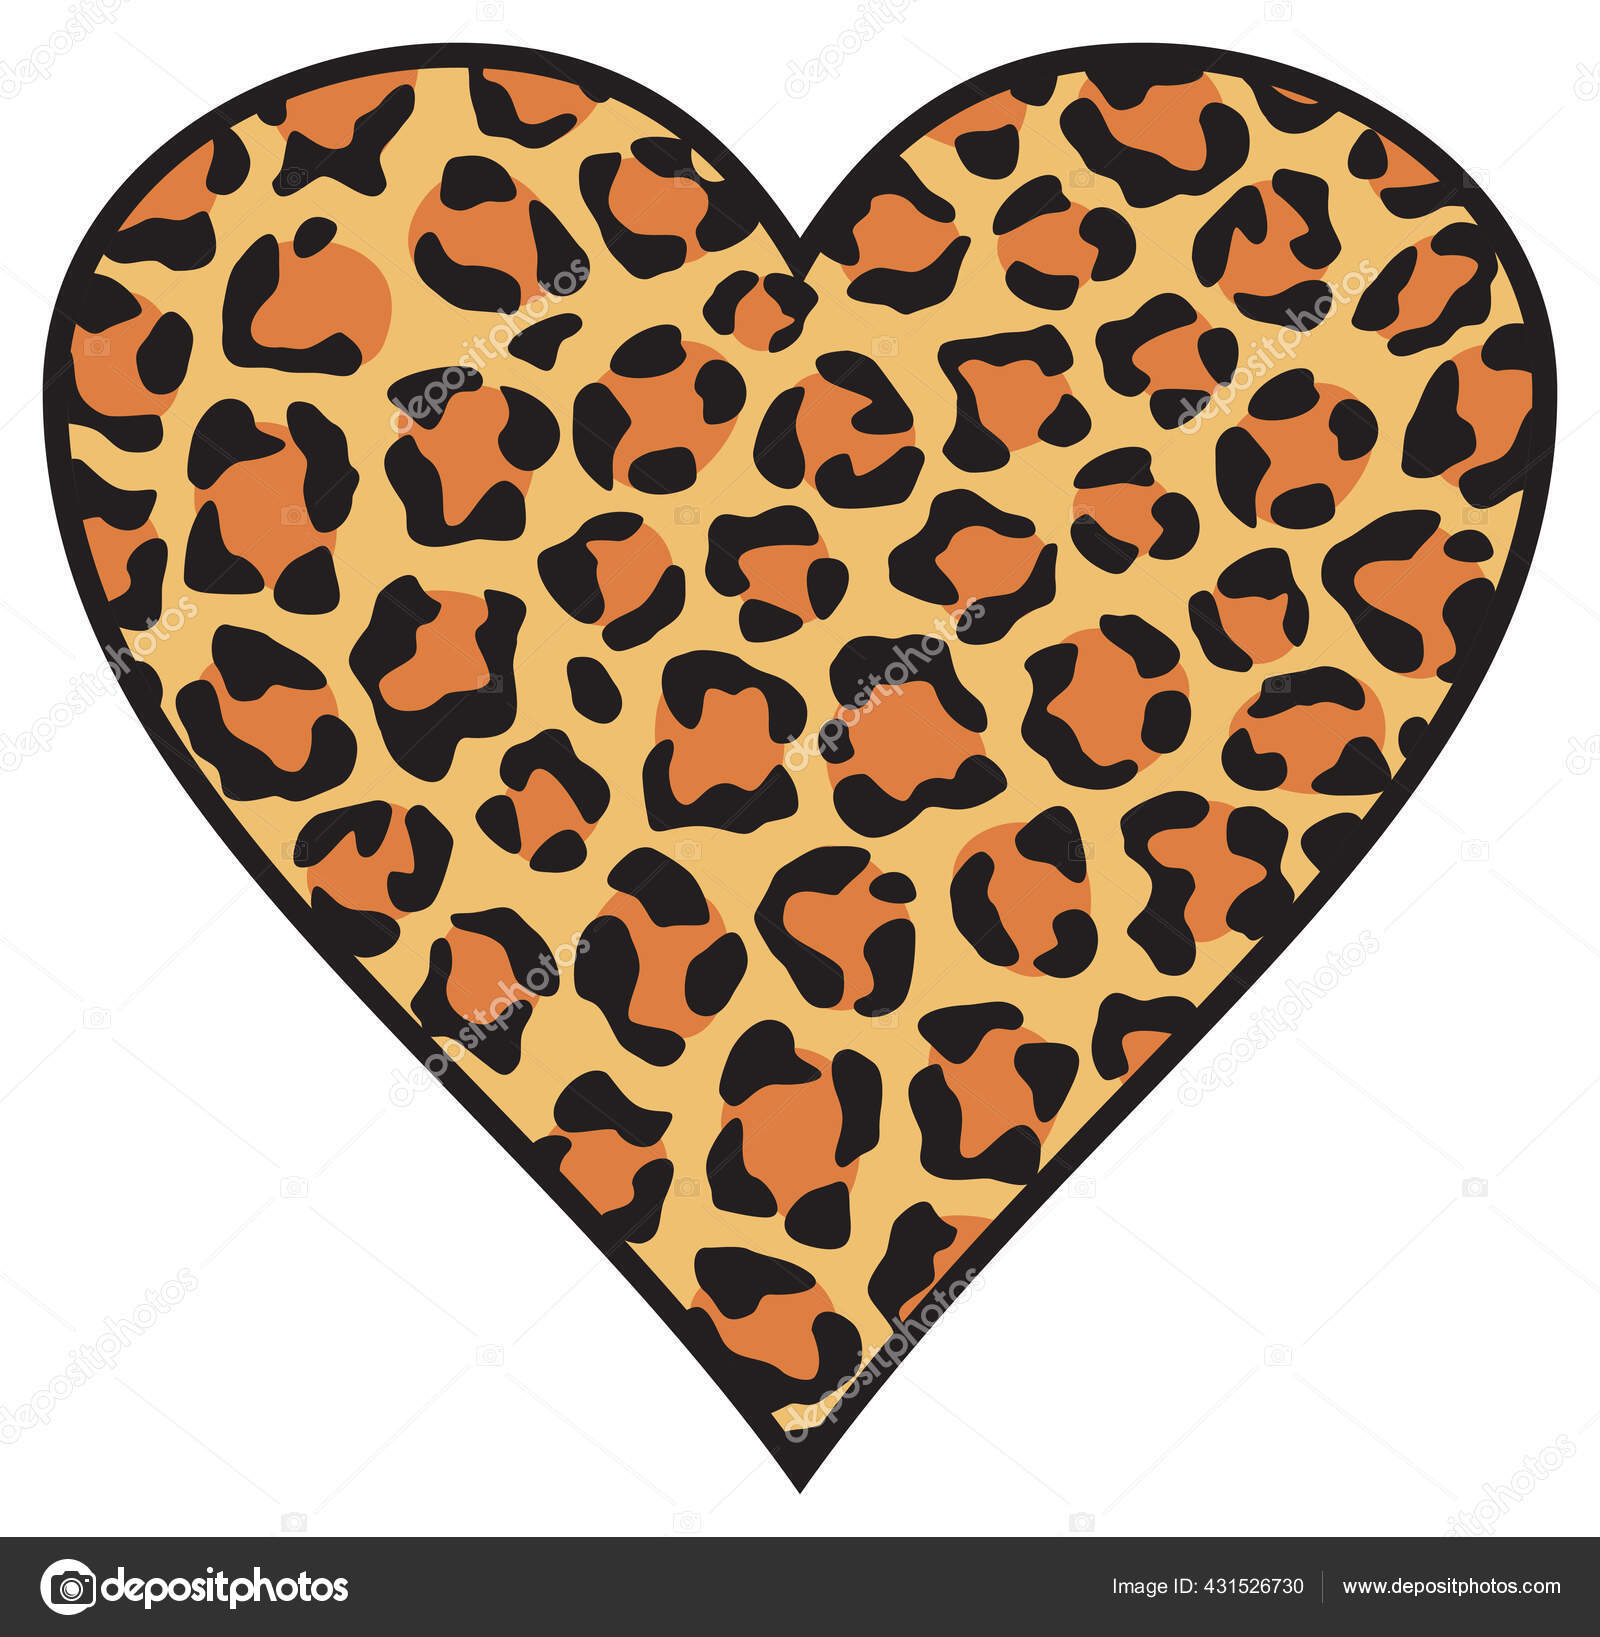 Leopard Skin Shape Heart Trendy Animal: vetor stock (livre de direitos)  1878958447